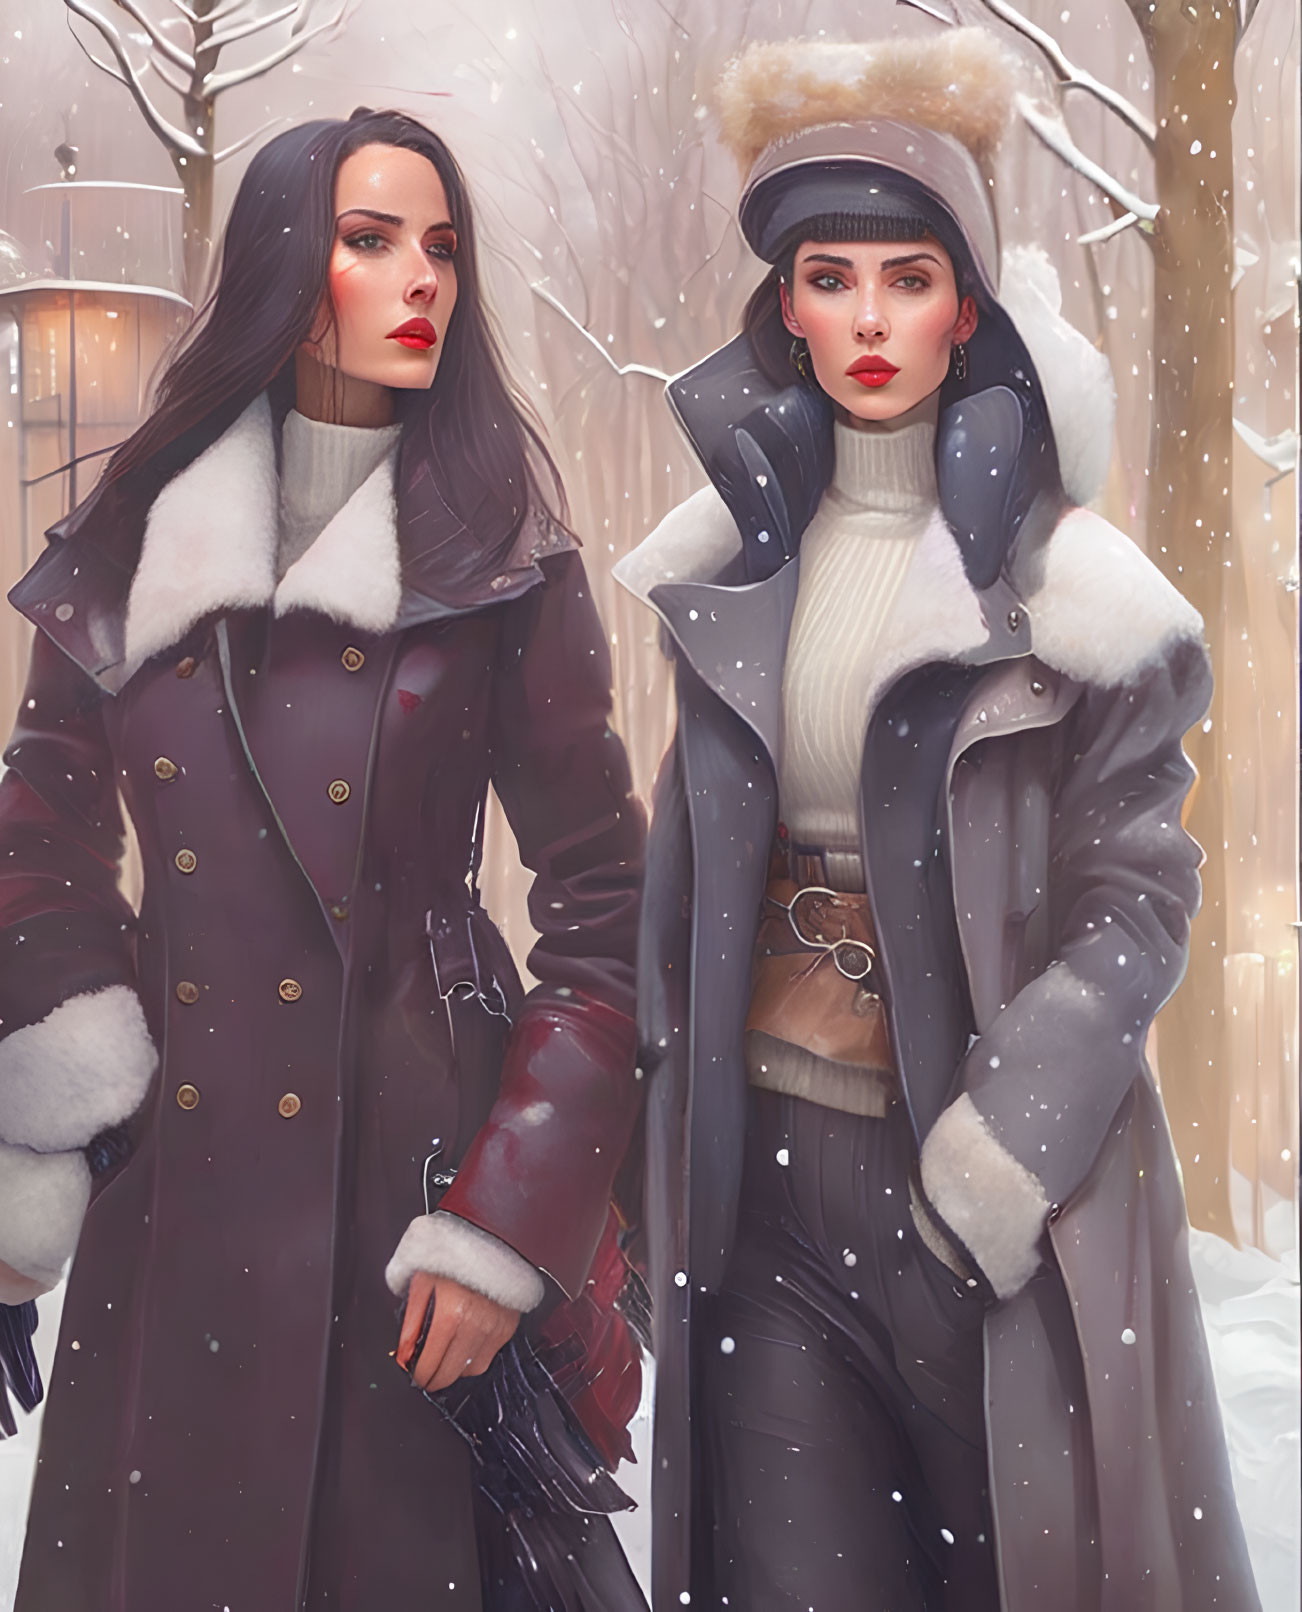 Two Women in Stylish Winter Attire Amidst Snowy Scene